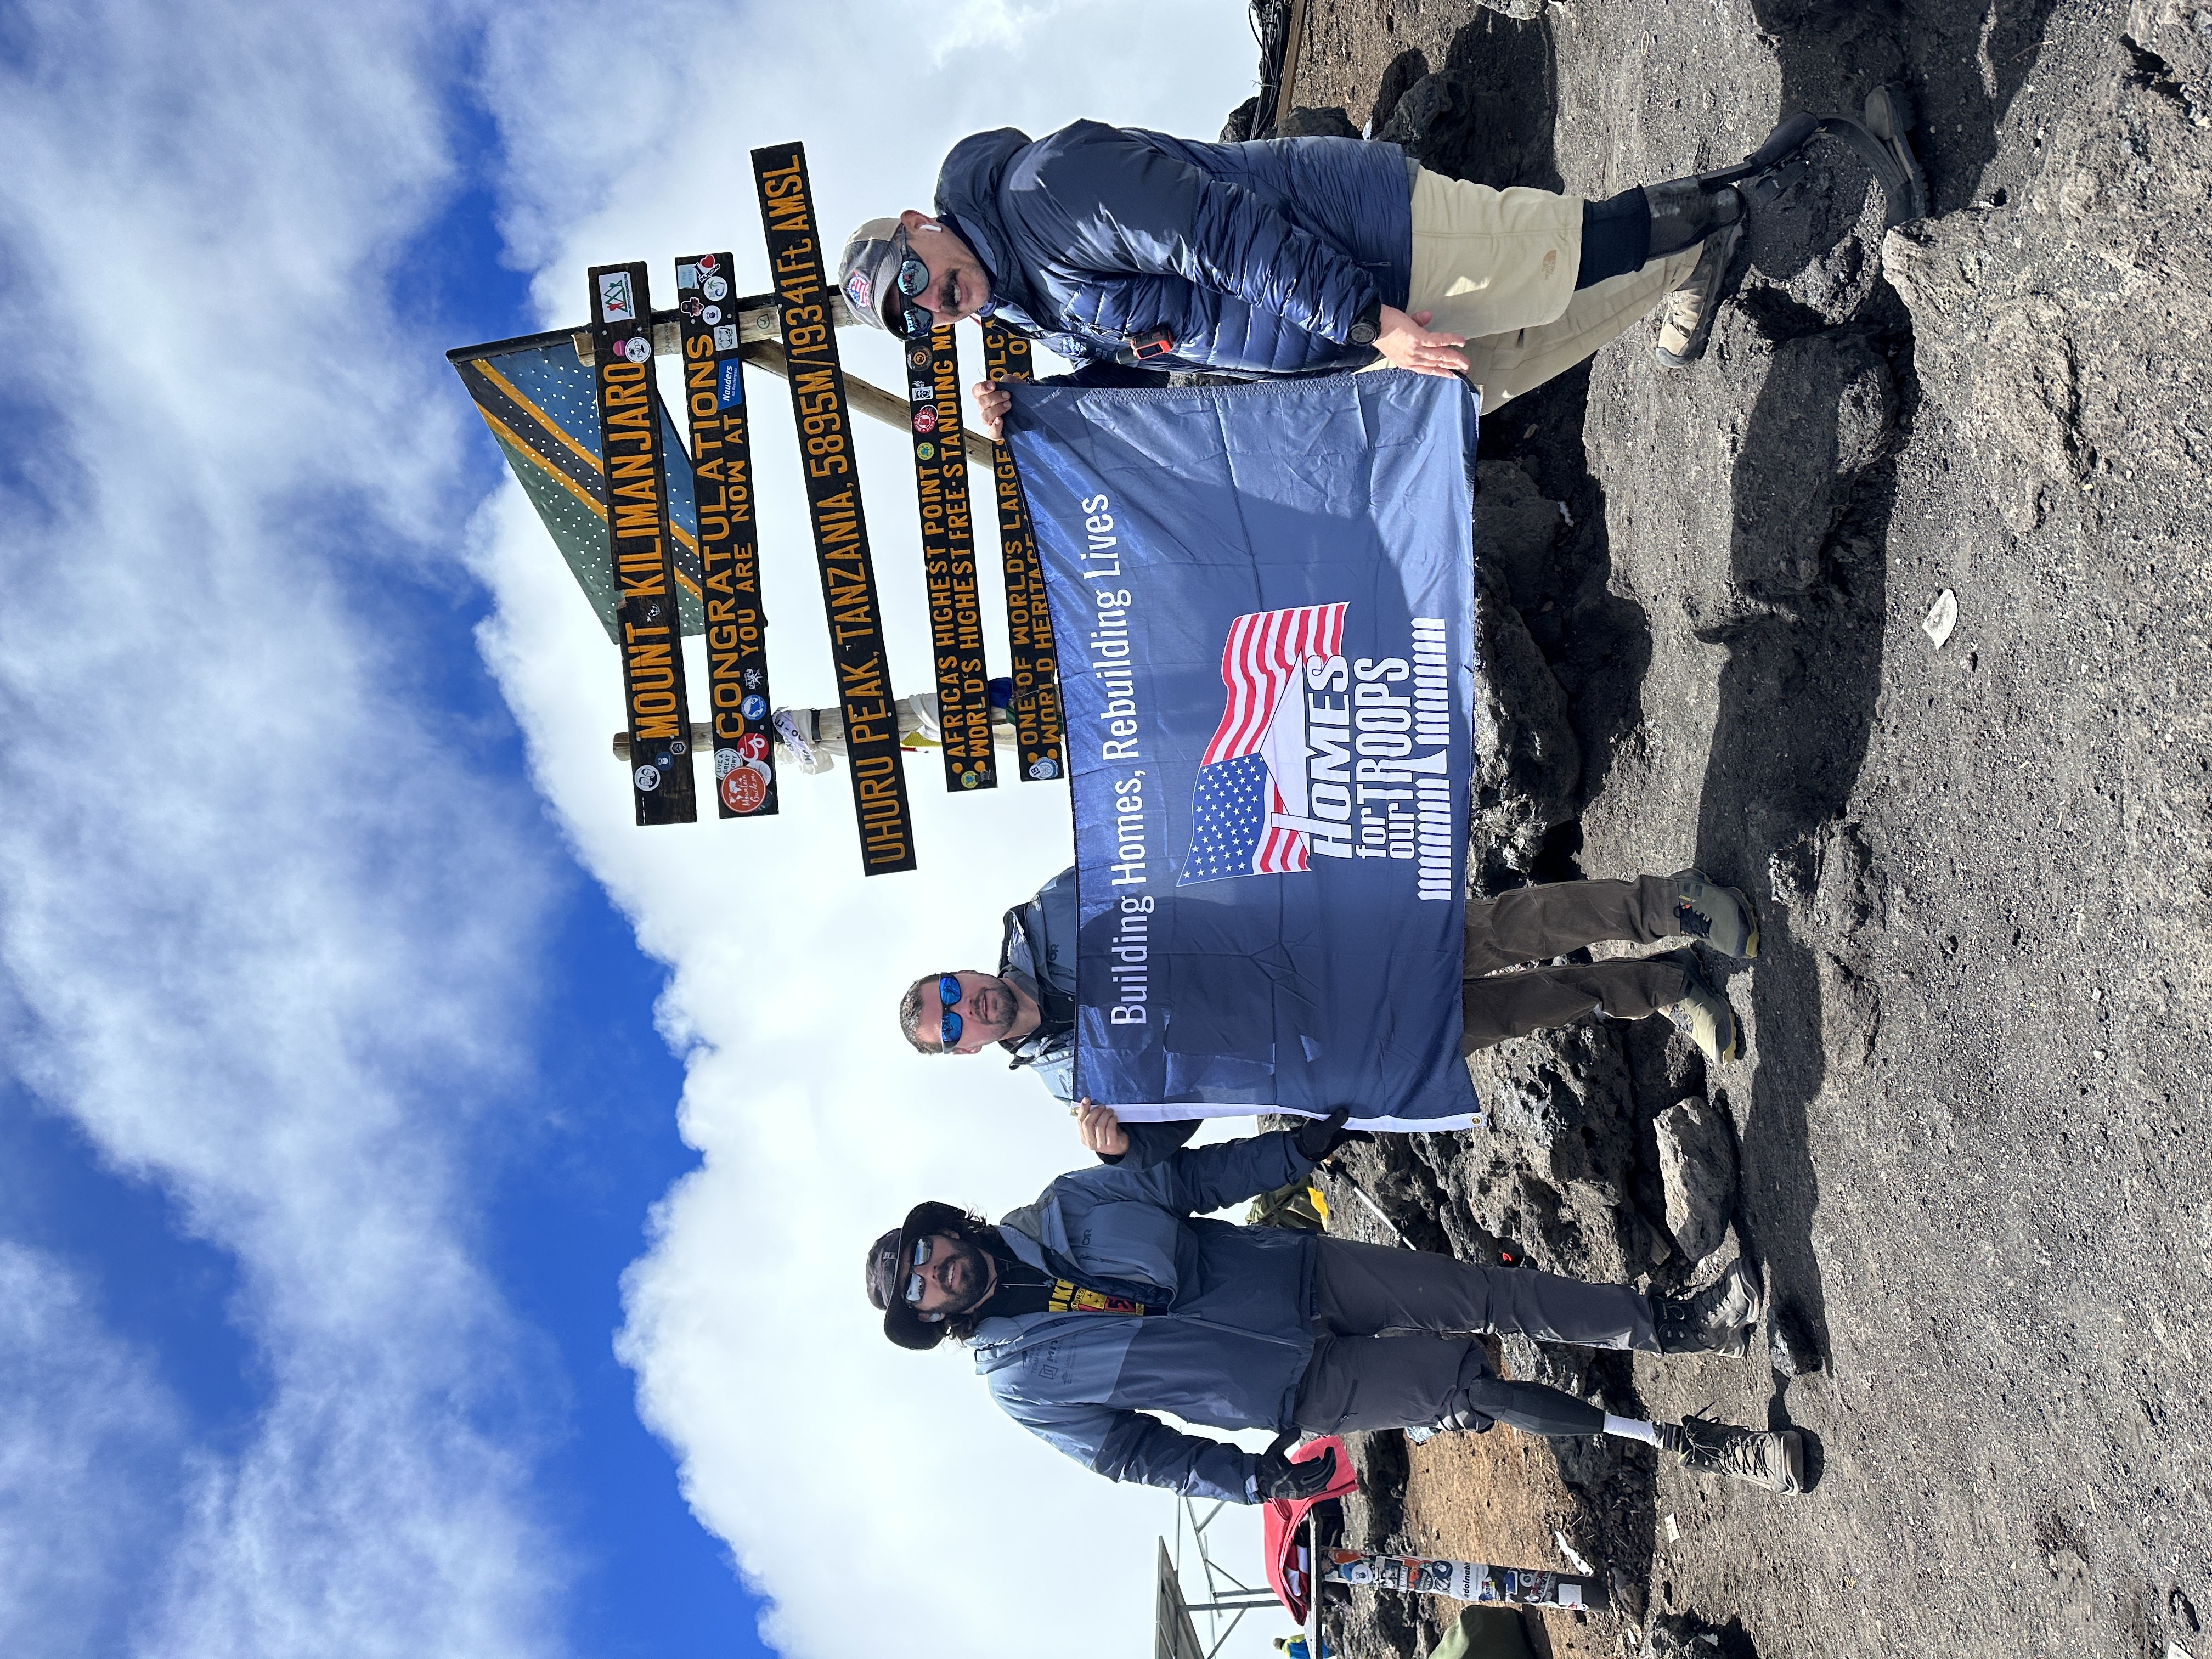 Severely injured post-9/11 Veterans  summit Mount Kilimanjaro to raise awareness for Veterans organizations